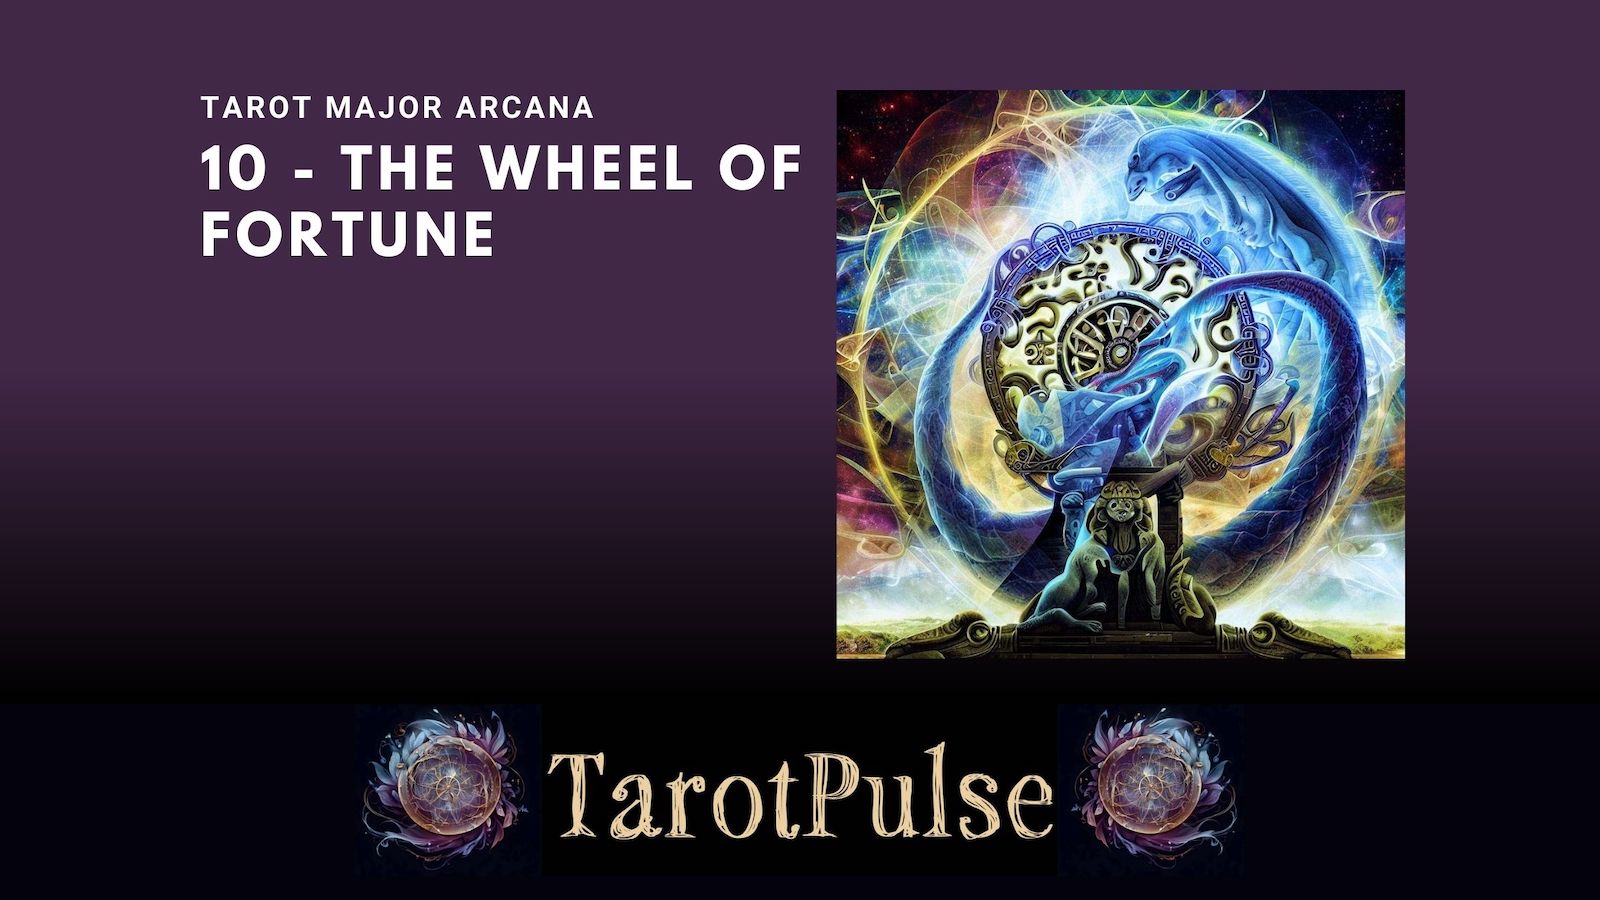 Tarot Major Arcana 10 - The Wheel of Fortune